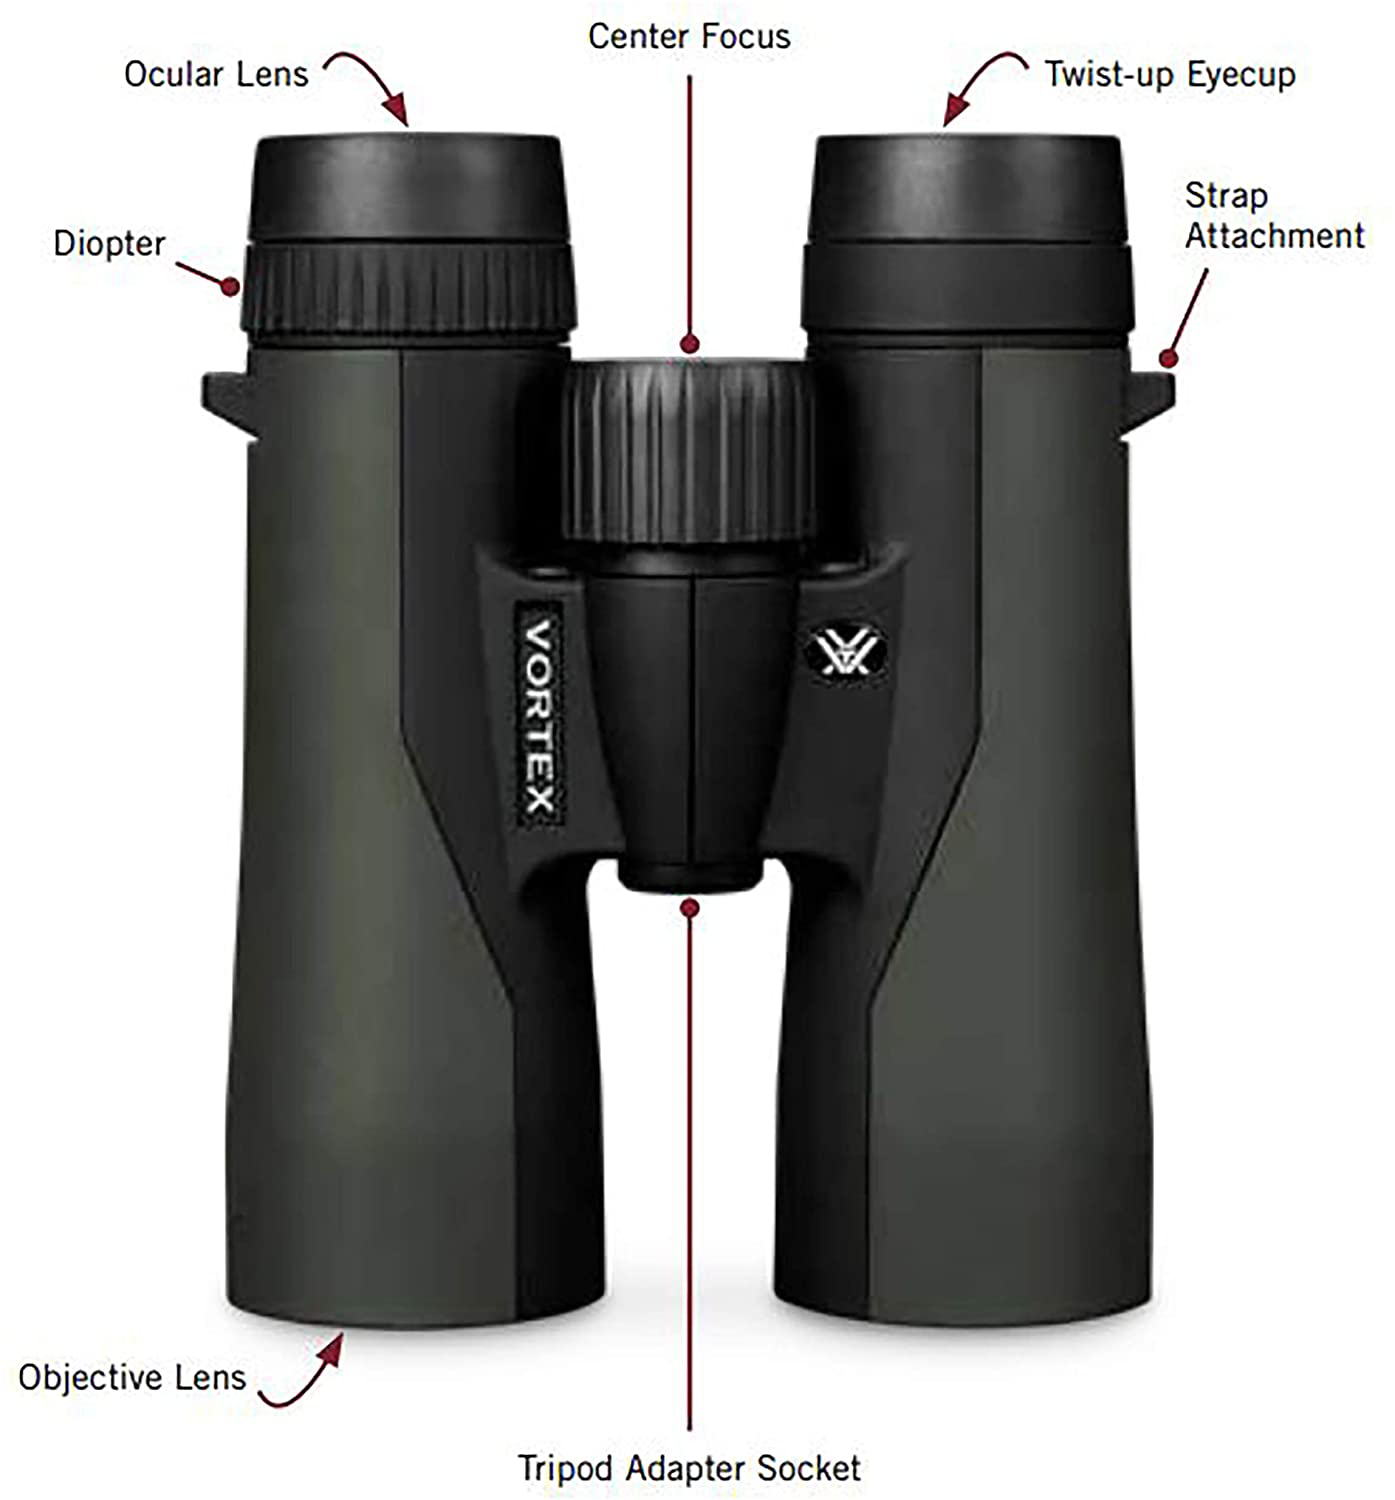 Vortex Optics Crossfire HD Binoculars